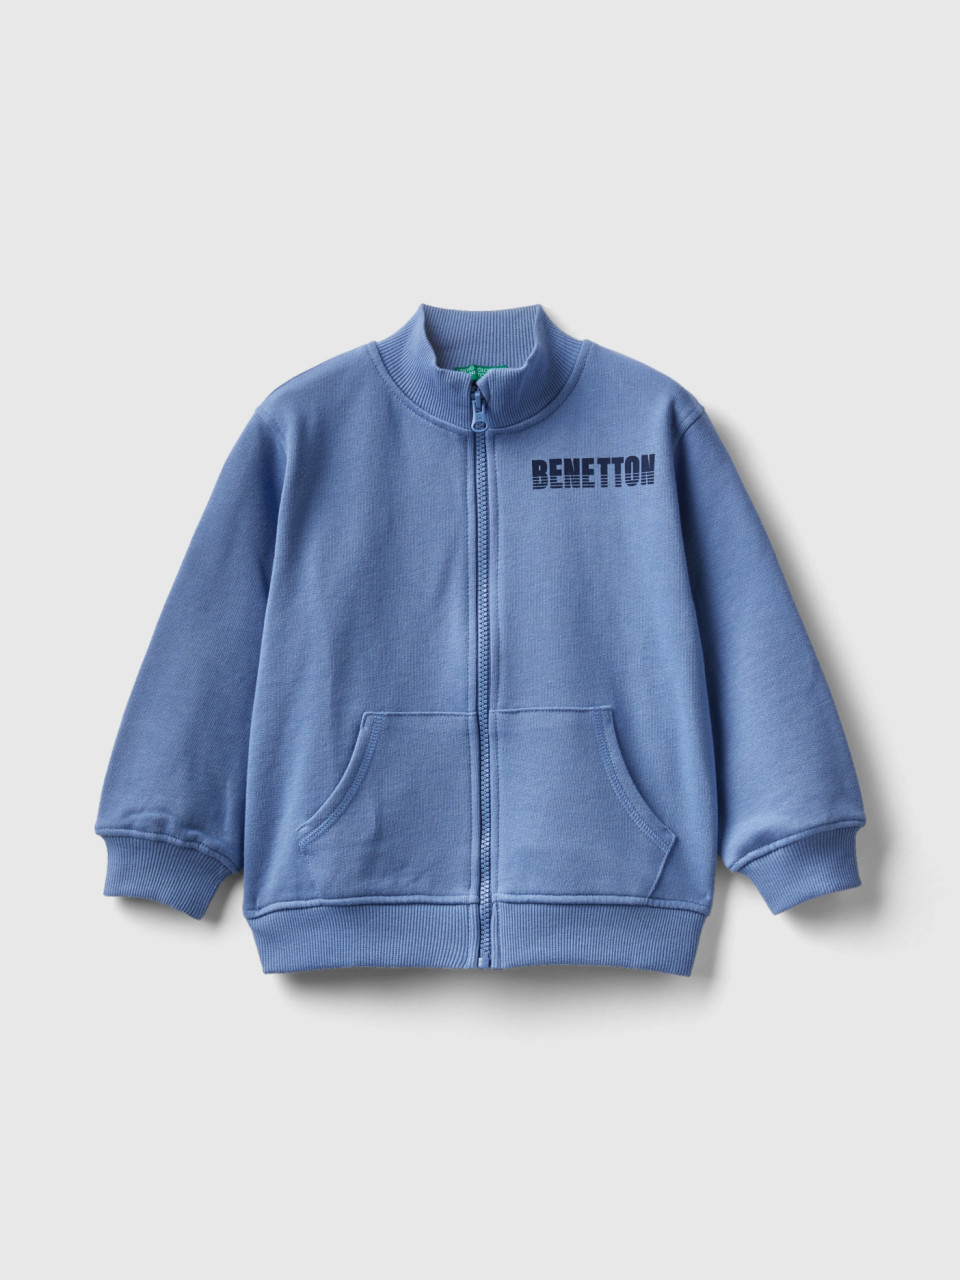 Benetton, Sweatshirt In Organic Cotton With Zip, Light Blue, Kids